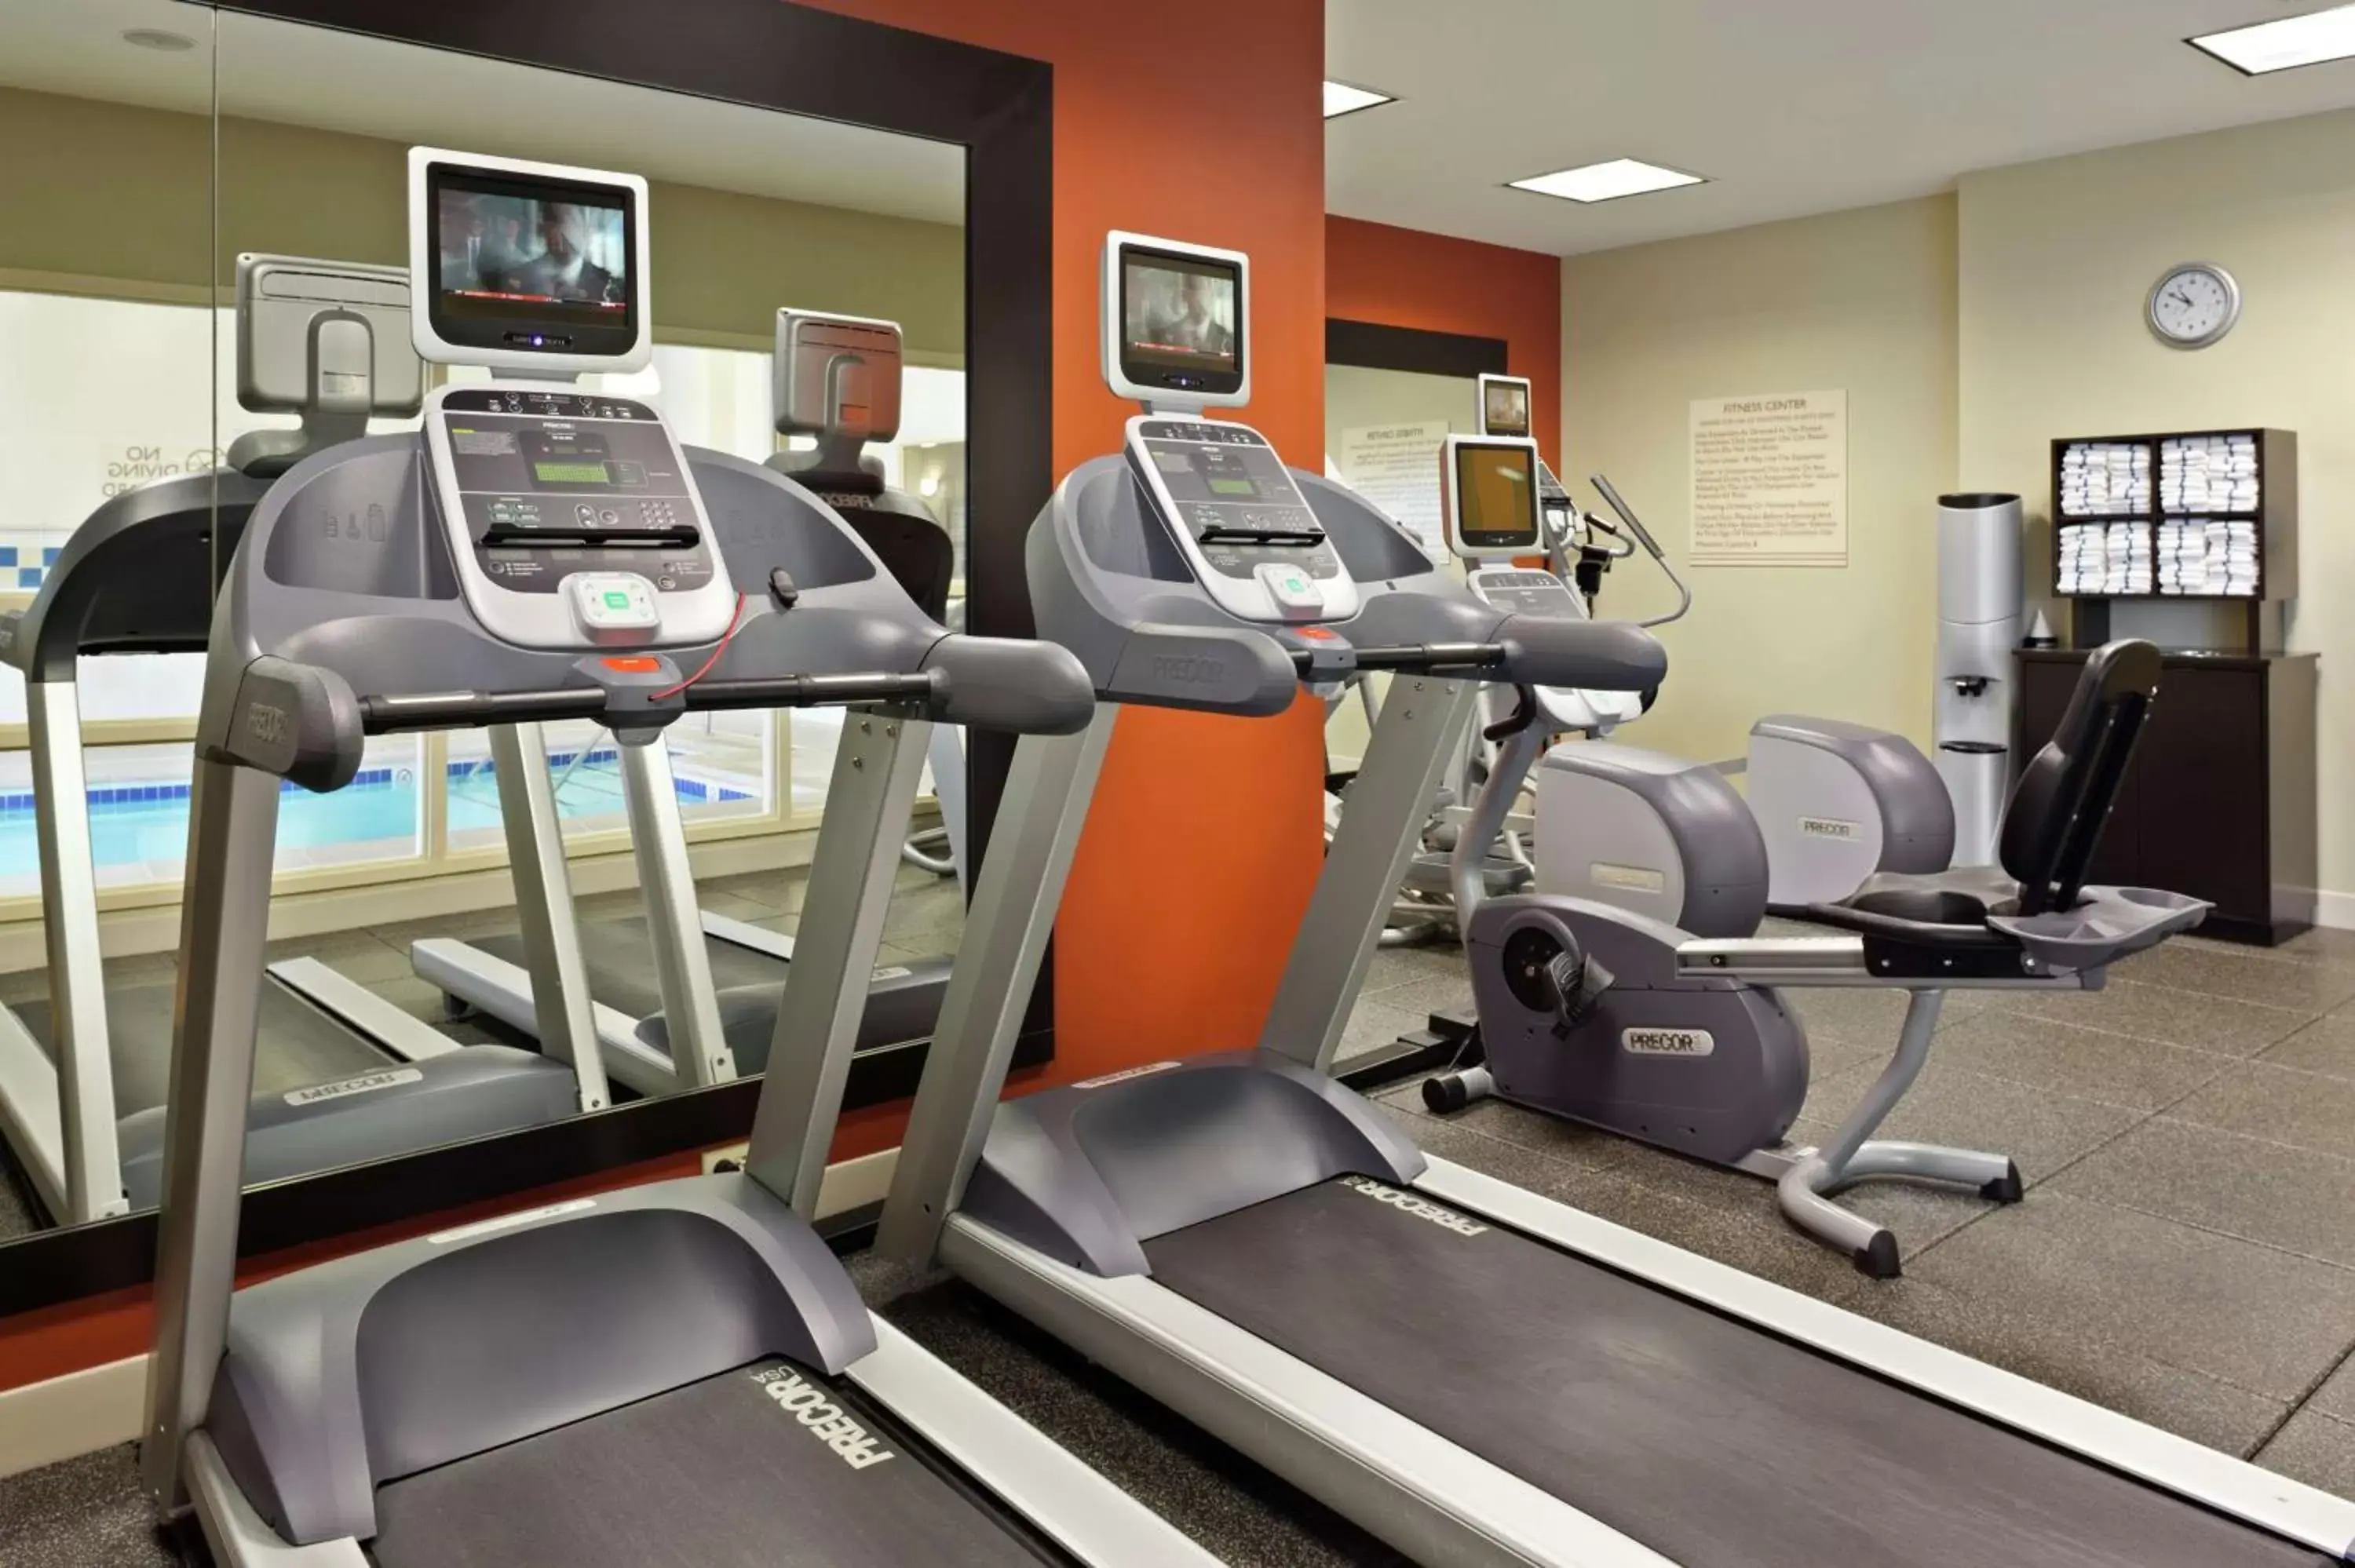 Fitness centre/facilities, Fitness Center/Facilities in Hilton Garden Inn Independence